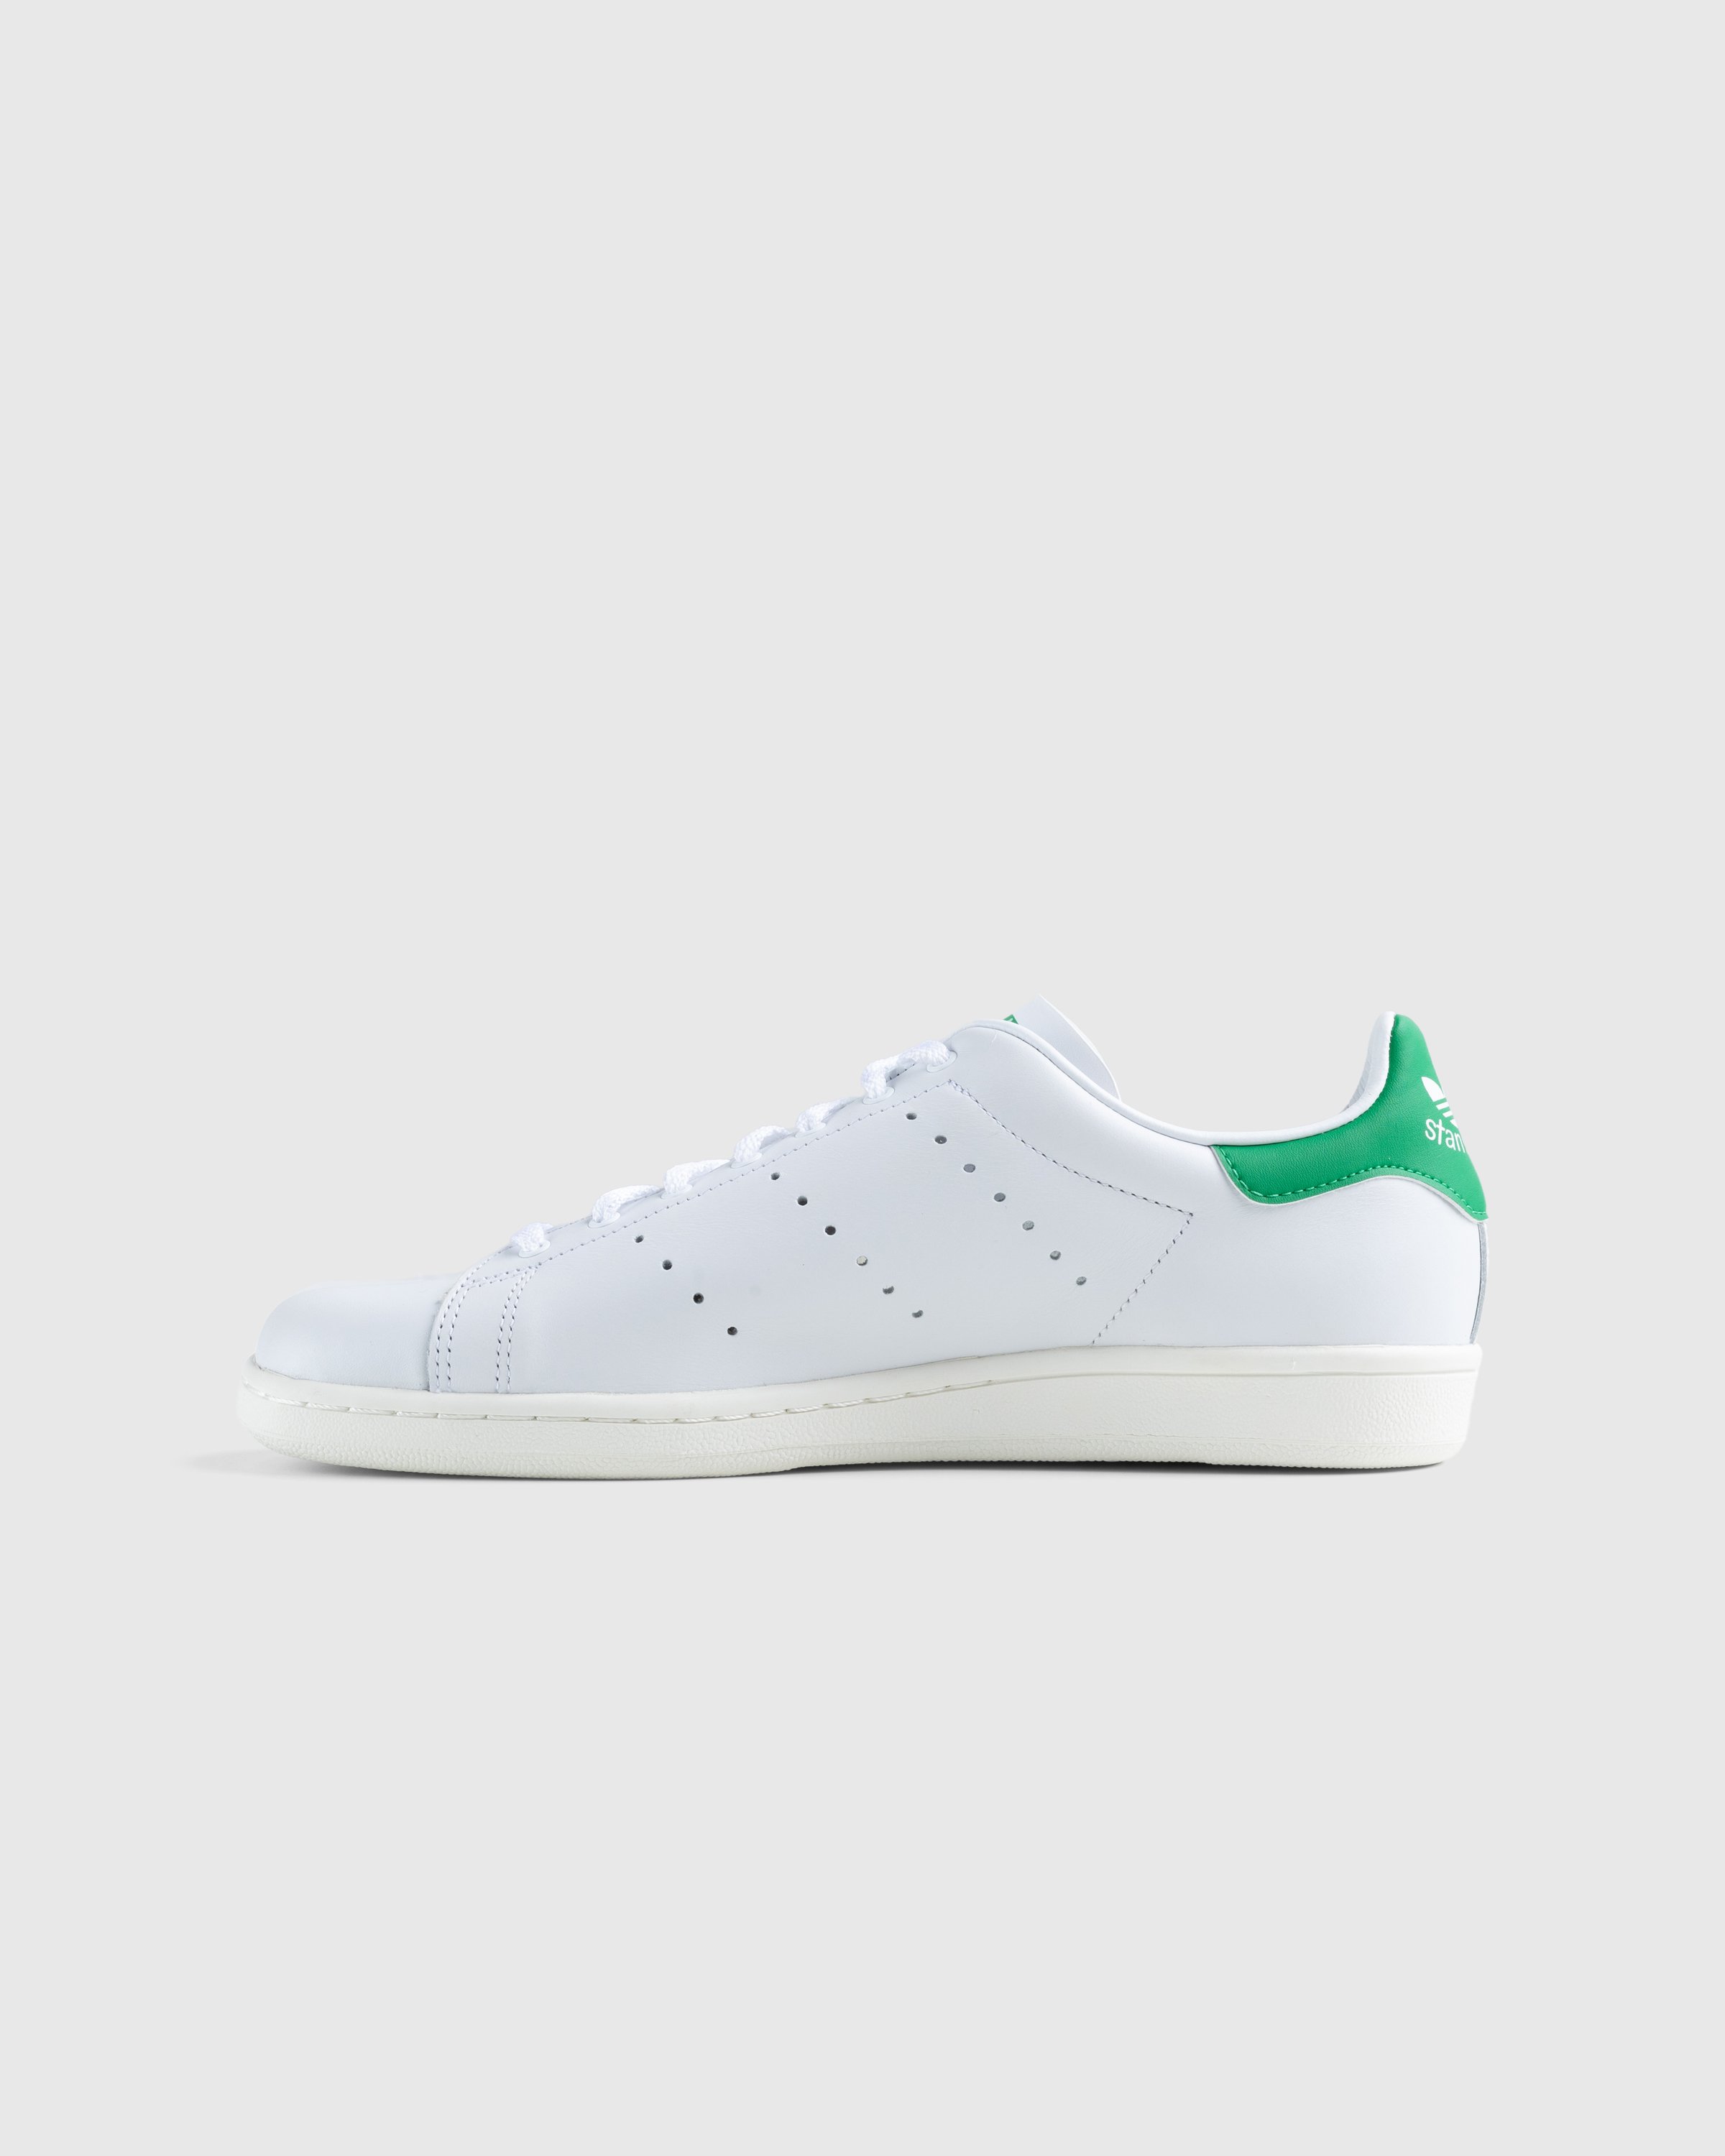 Adidas - Stan Smith 80s - Footwear - White - Image 2